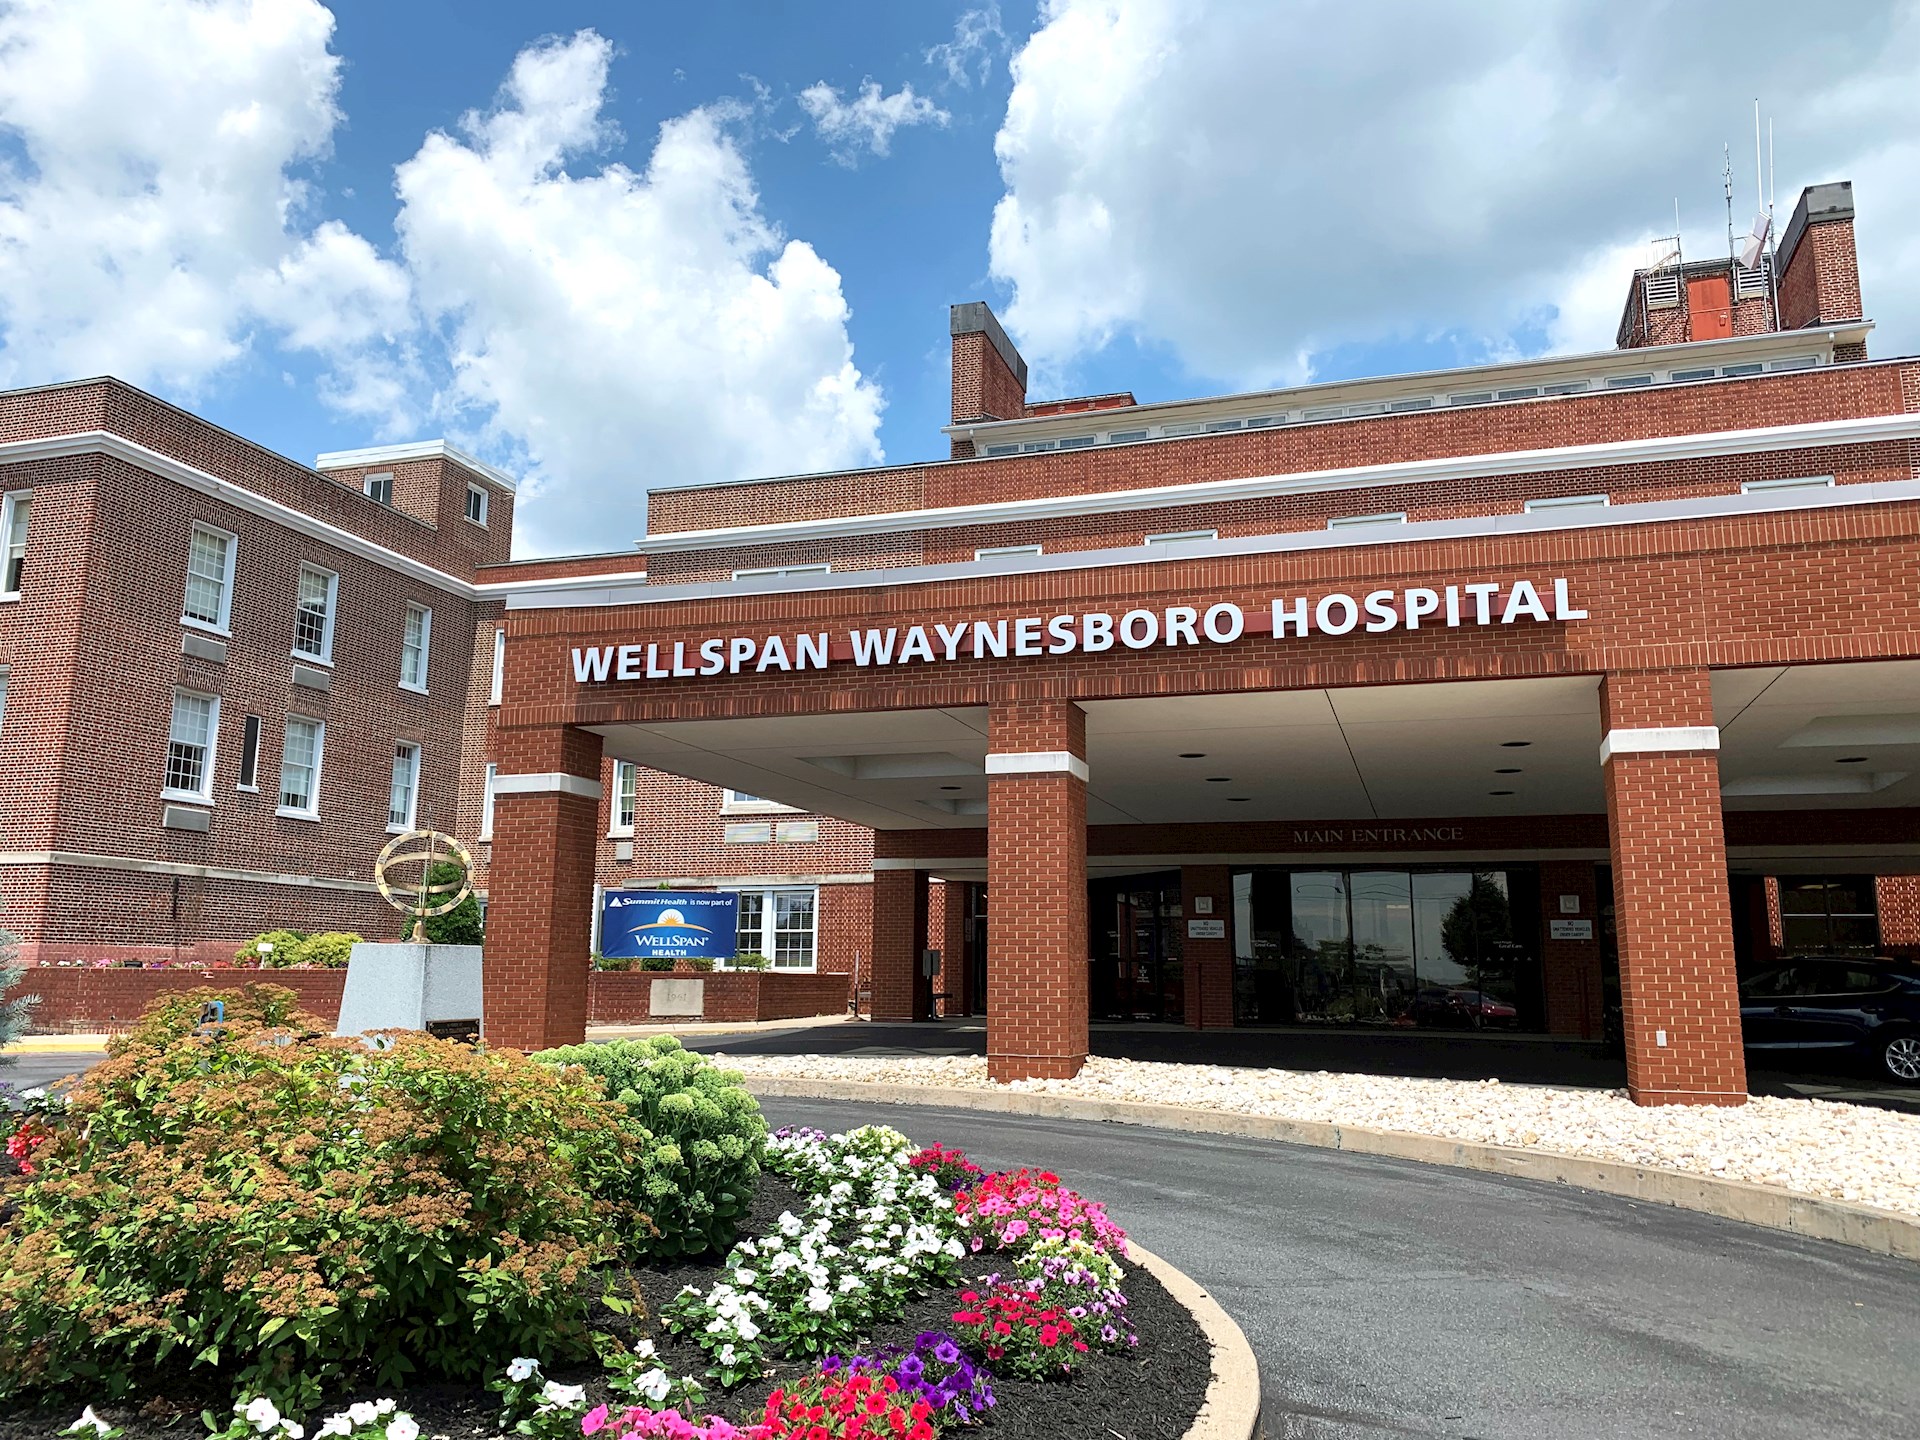 WellSpan Waynesboro Hospital named a Best Hospital in America by Money